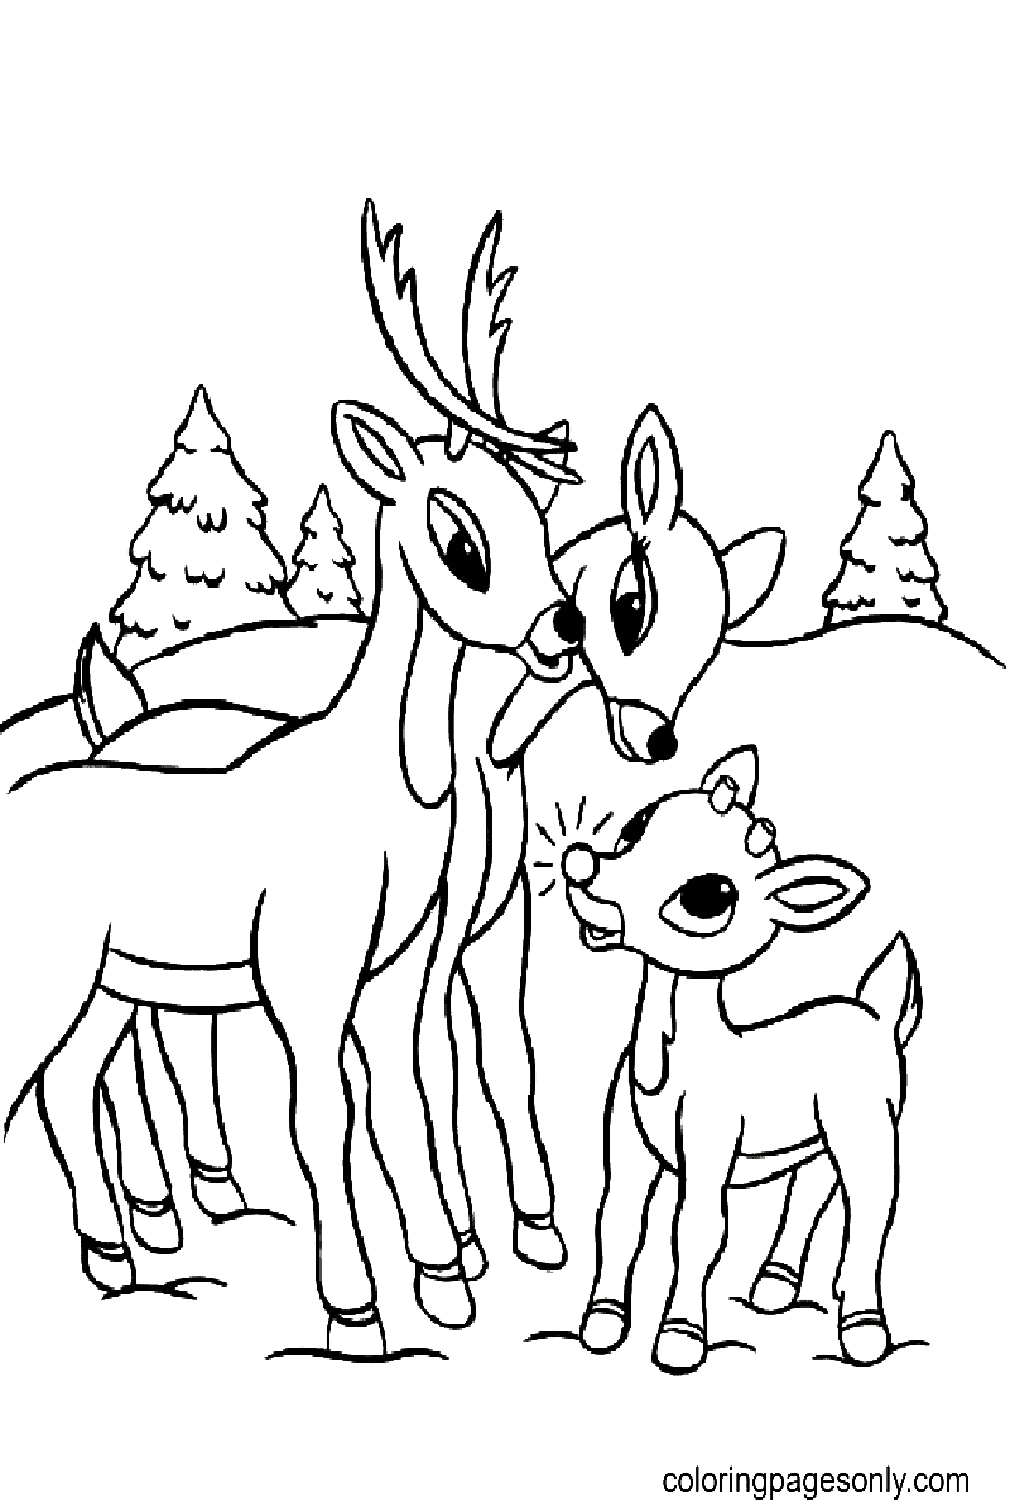 Rudolph Reindeer com família from Reindeer